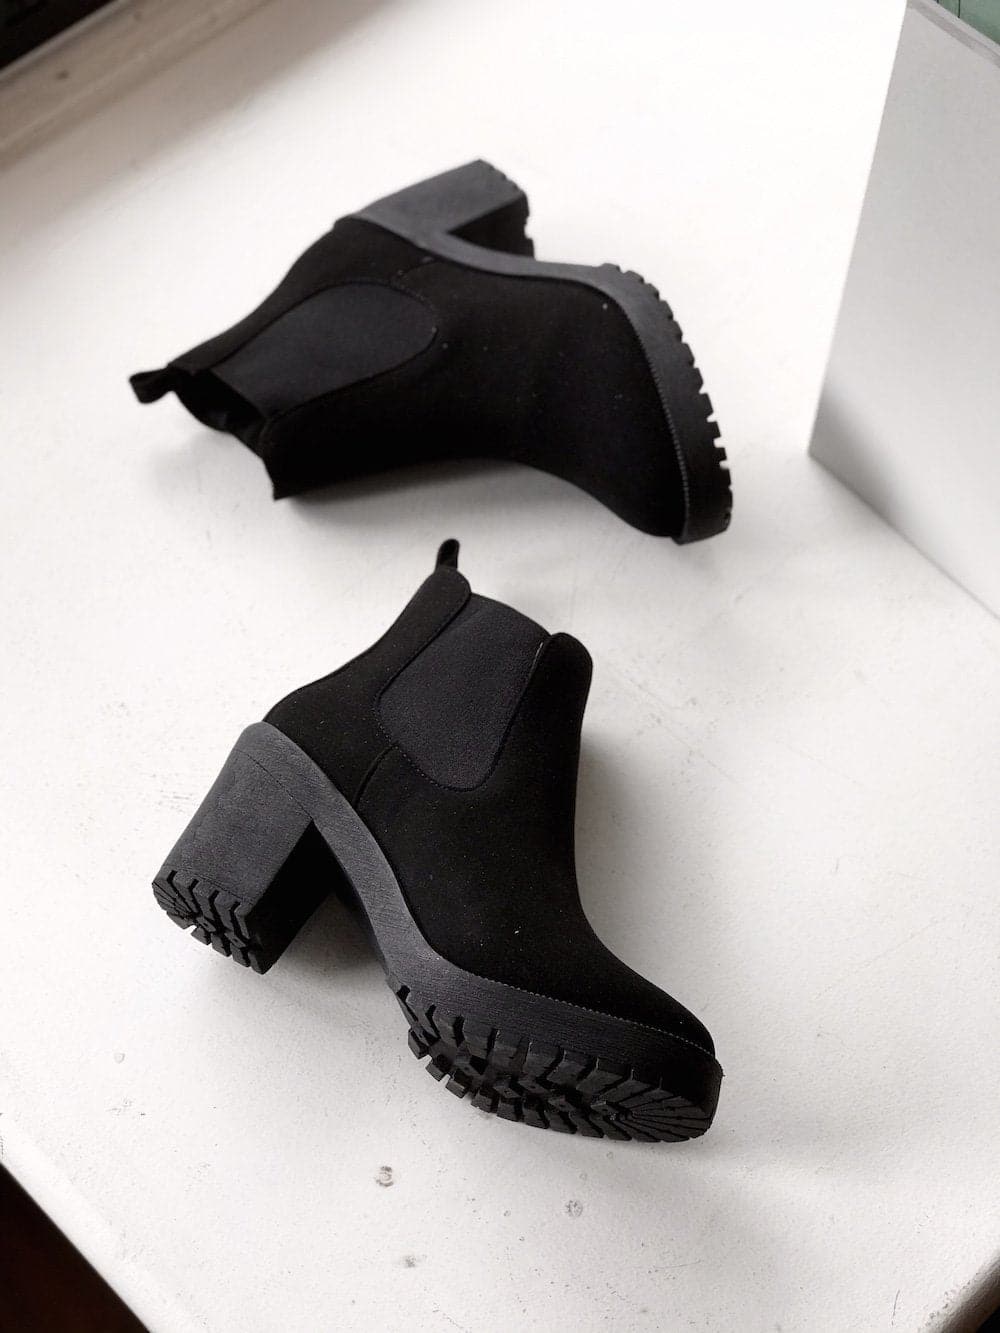 'Evie' Boots by Zette Shoes - Black Suede